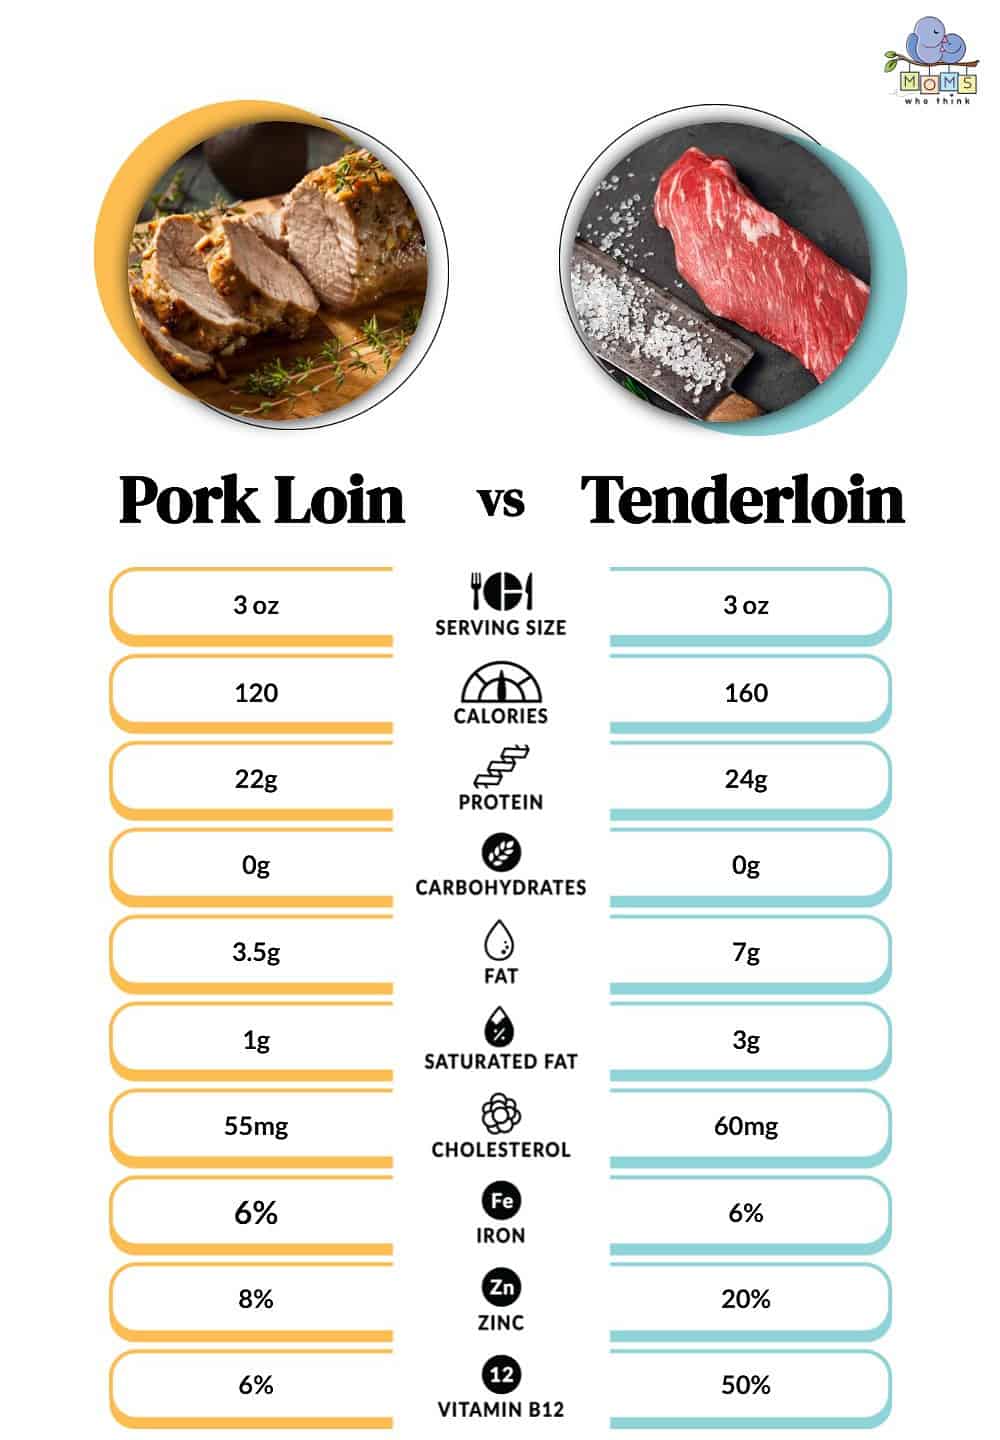 Pork Loin vs Tenderloin Nutritional Facts